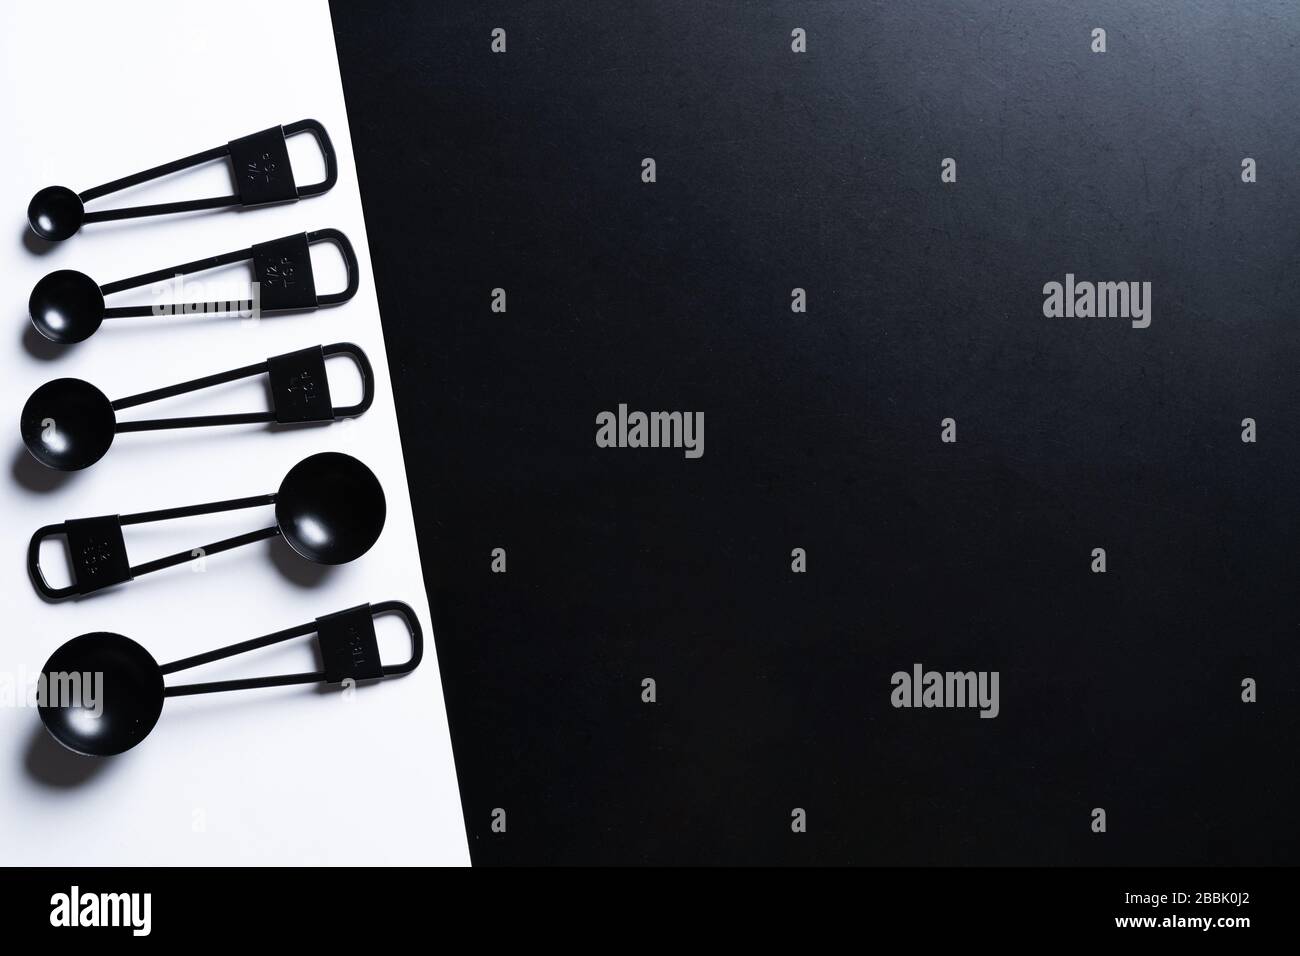 https://c8.alamy.com/comp/2BBK0J2/black-measuring-spoons-on-black-and-white-background-2BBK0J2.jpg